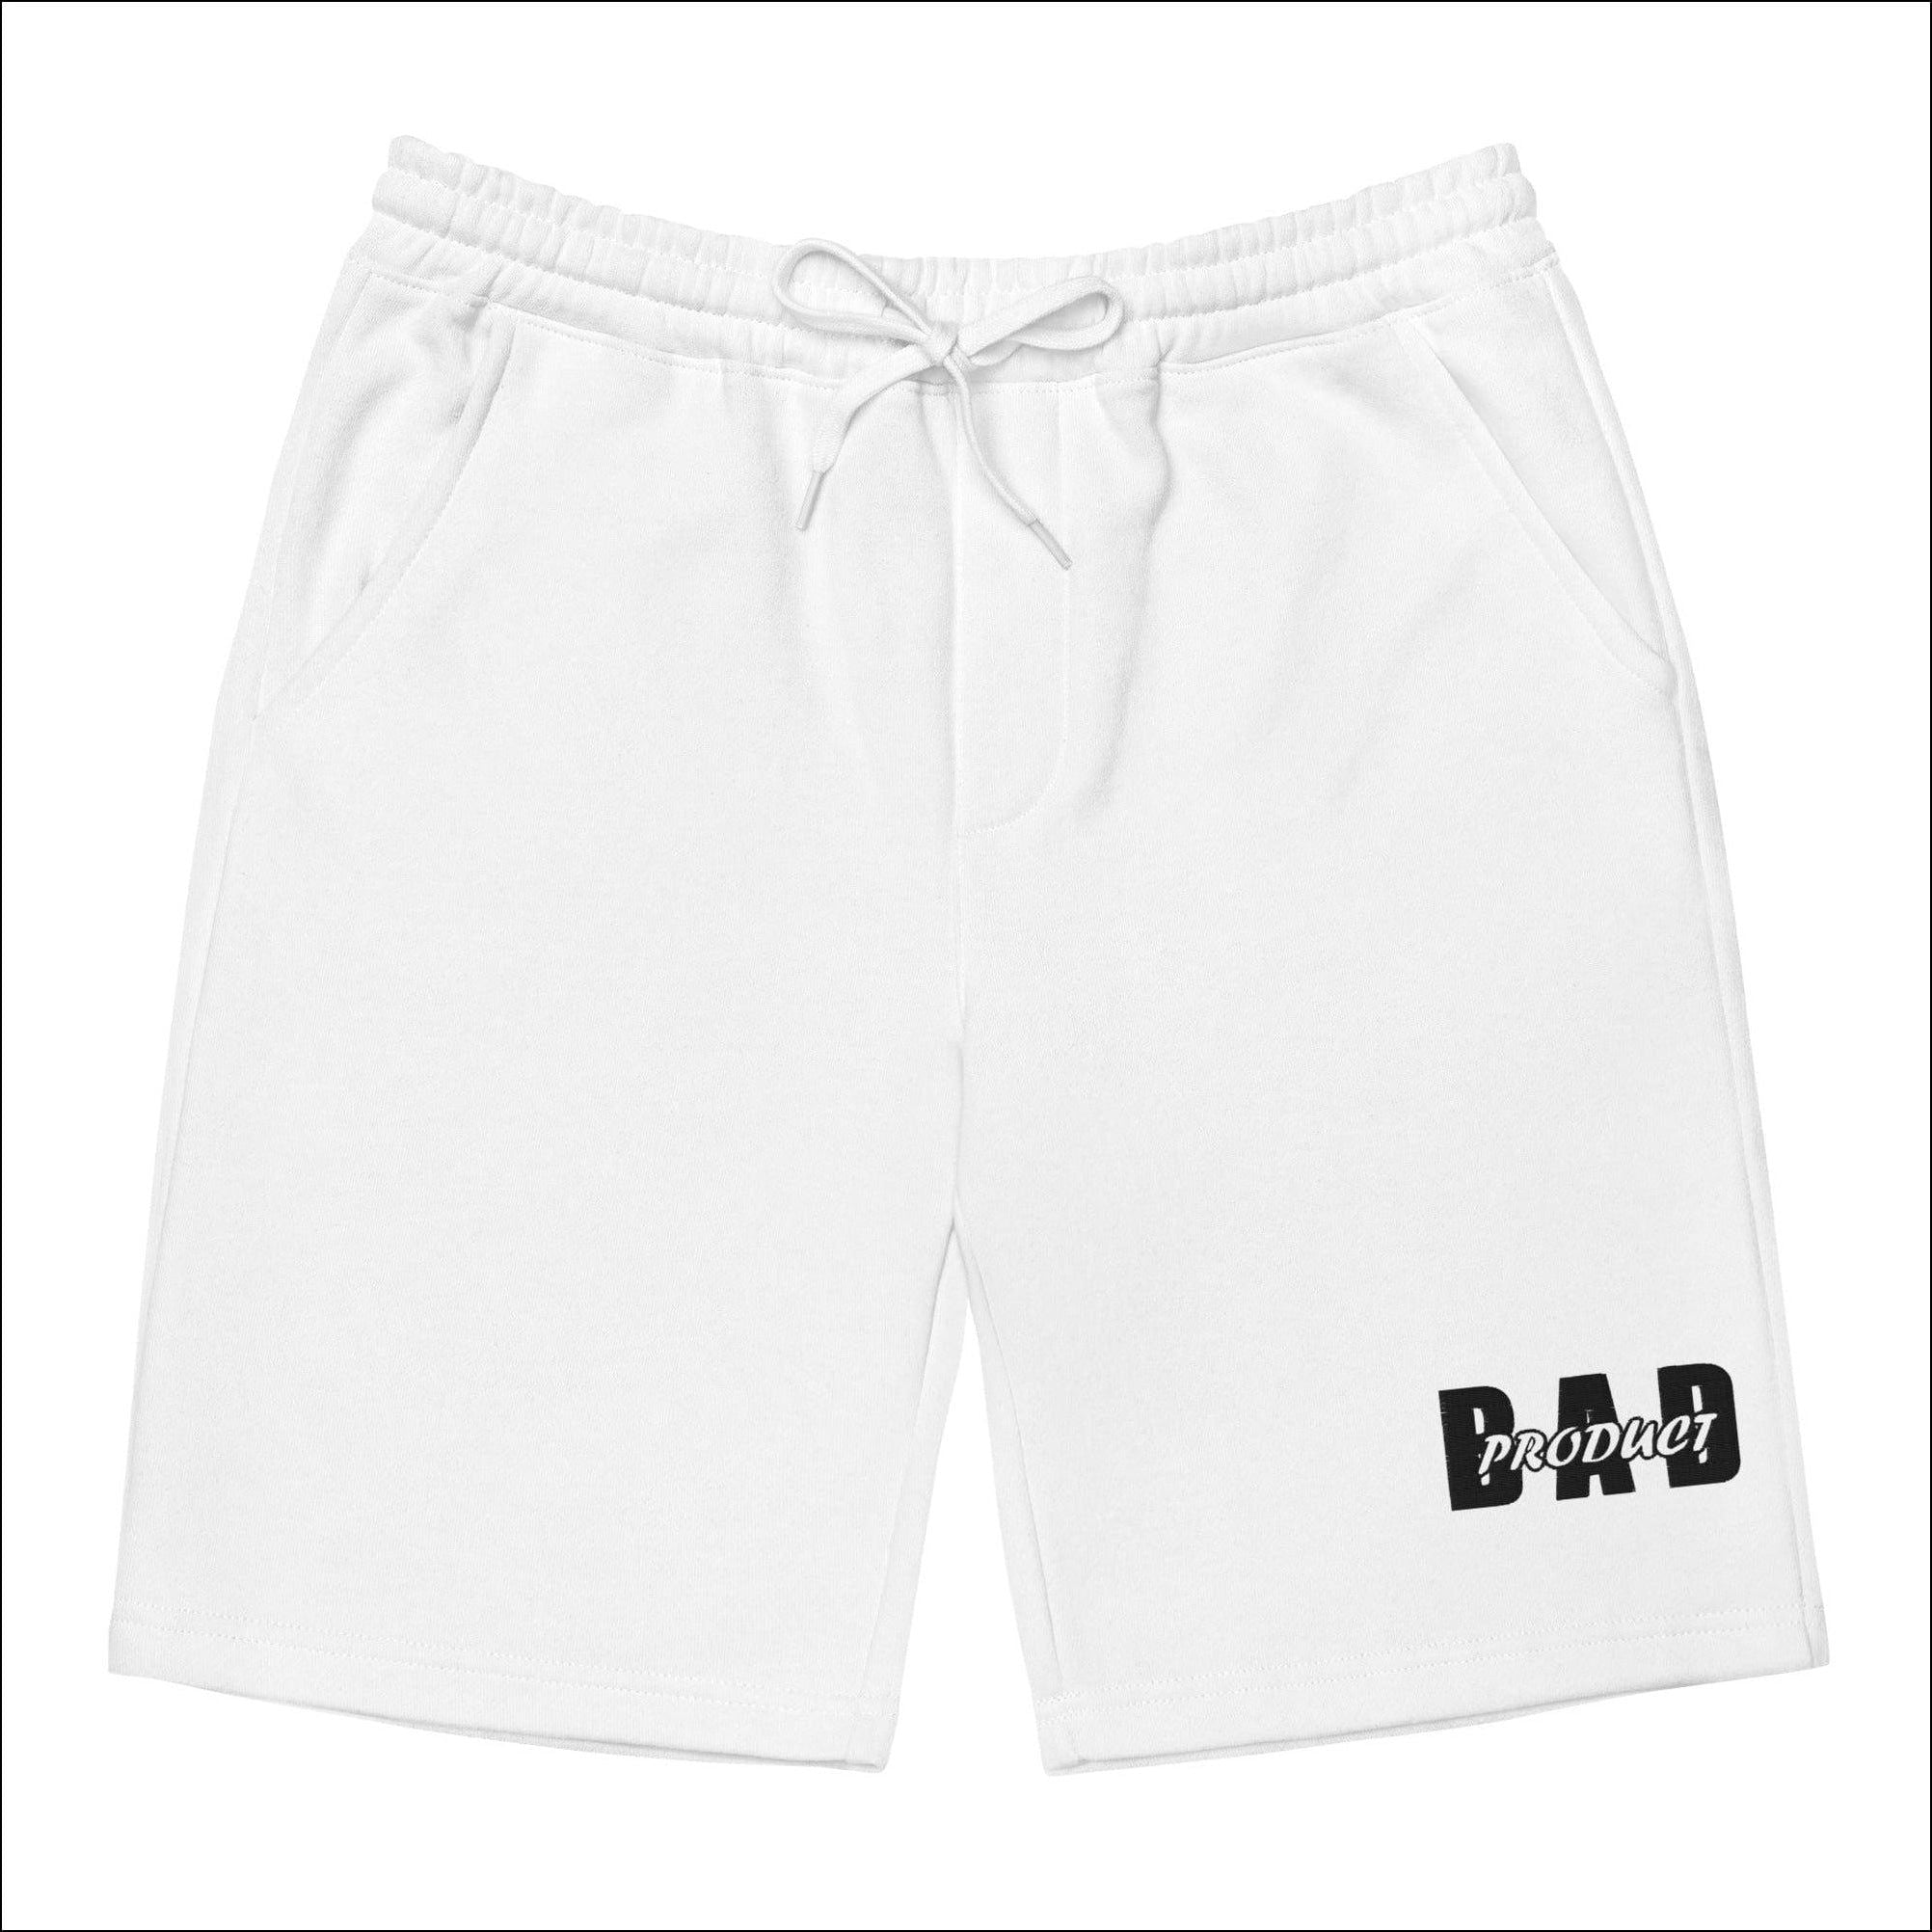 Bold Bad Shorts - Bad Product